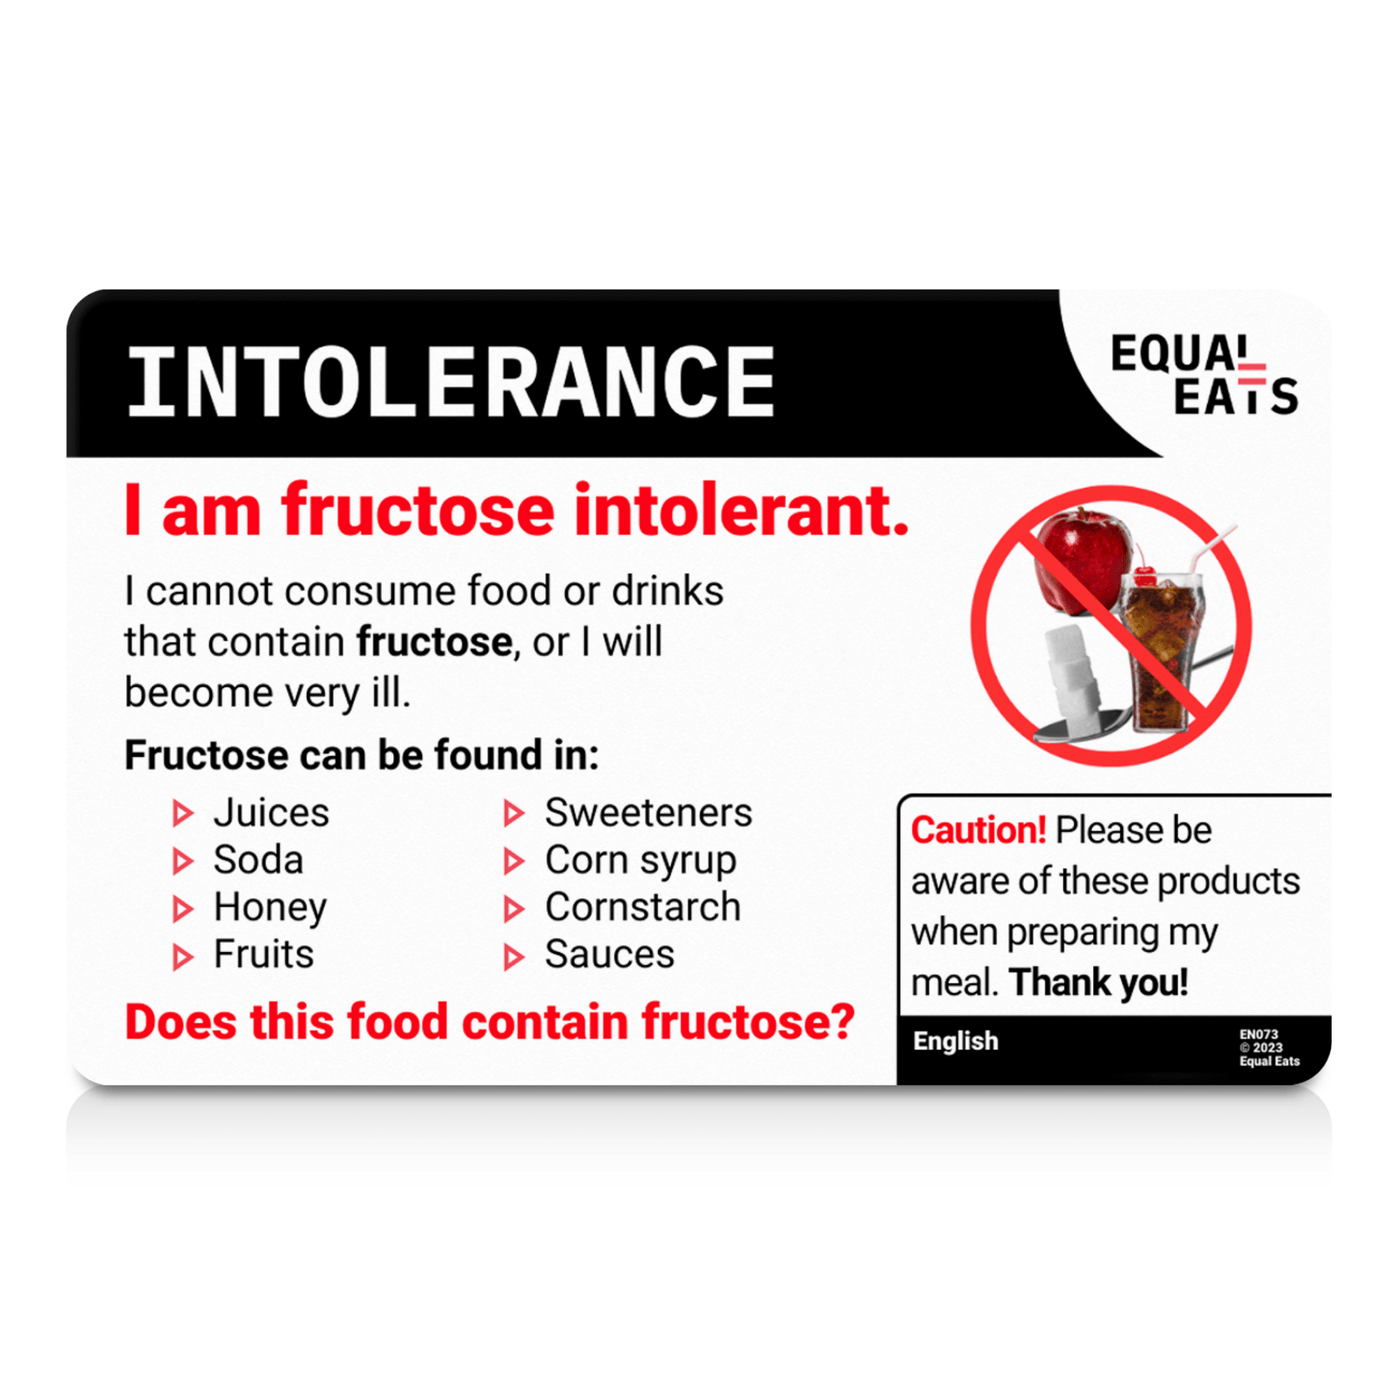 Icelandic Fructose Intolerance Card